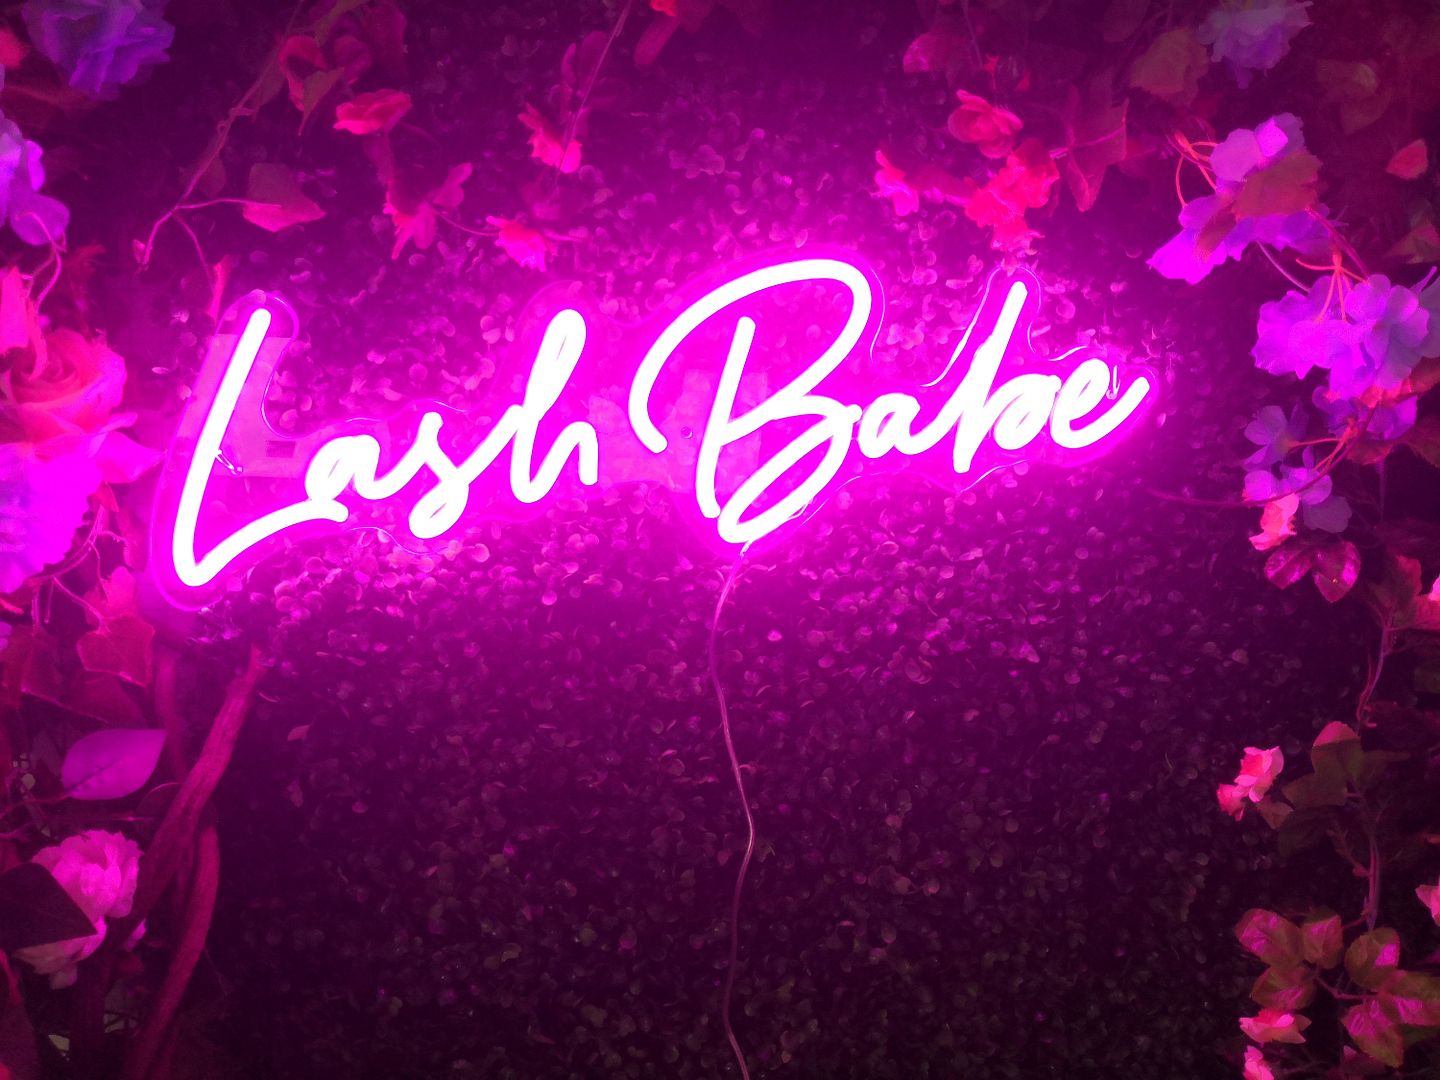 Lash Babe Neon Sign